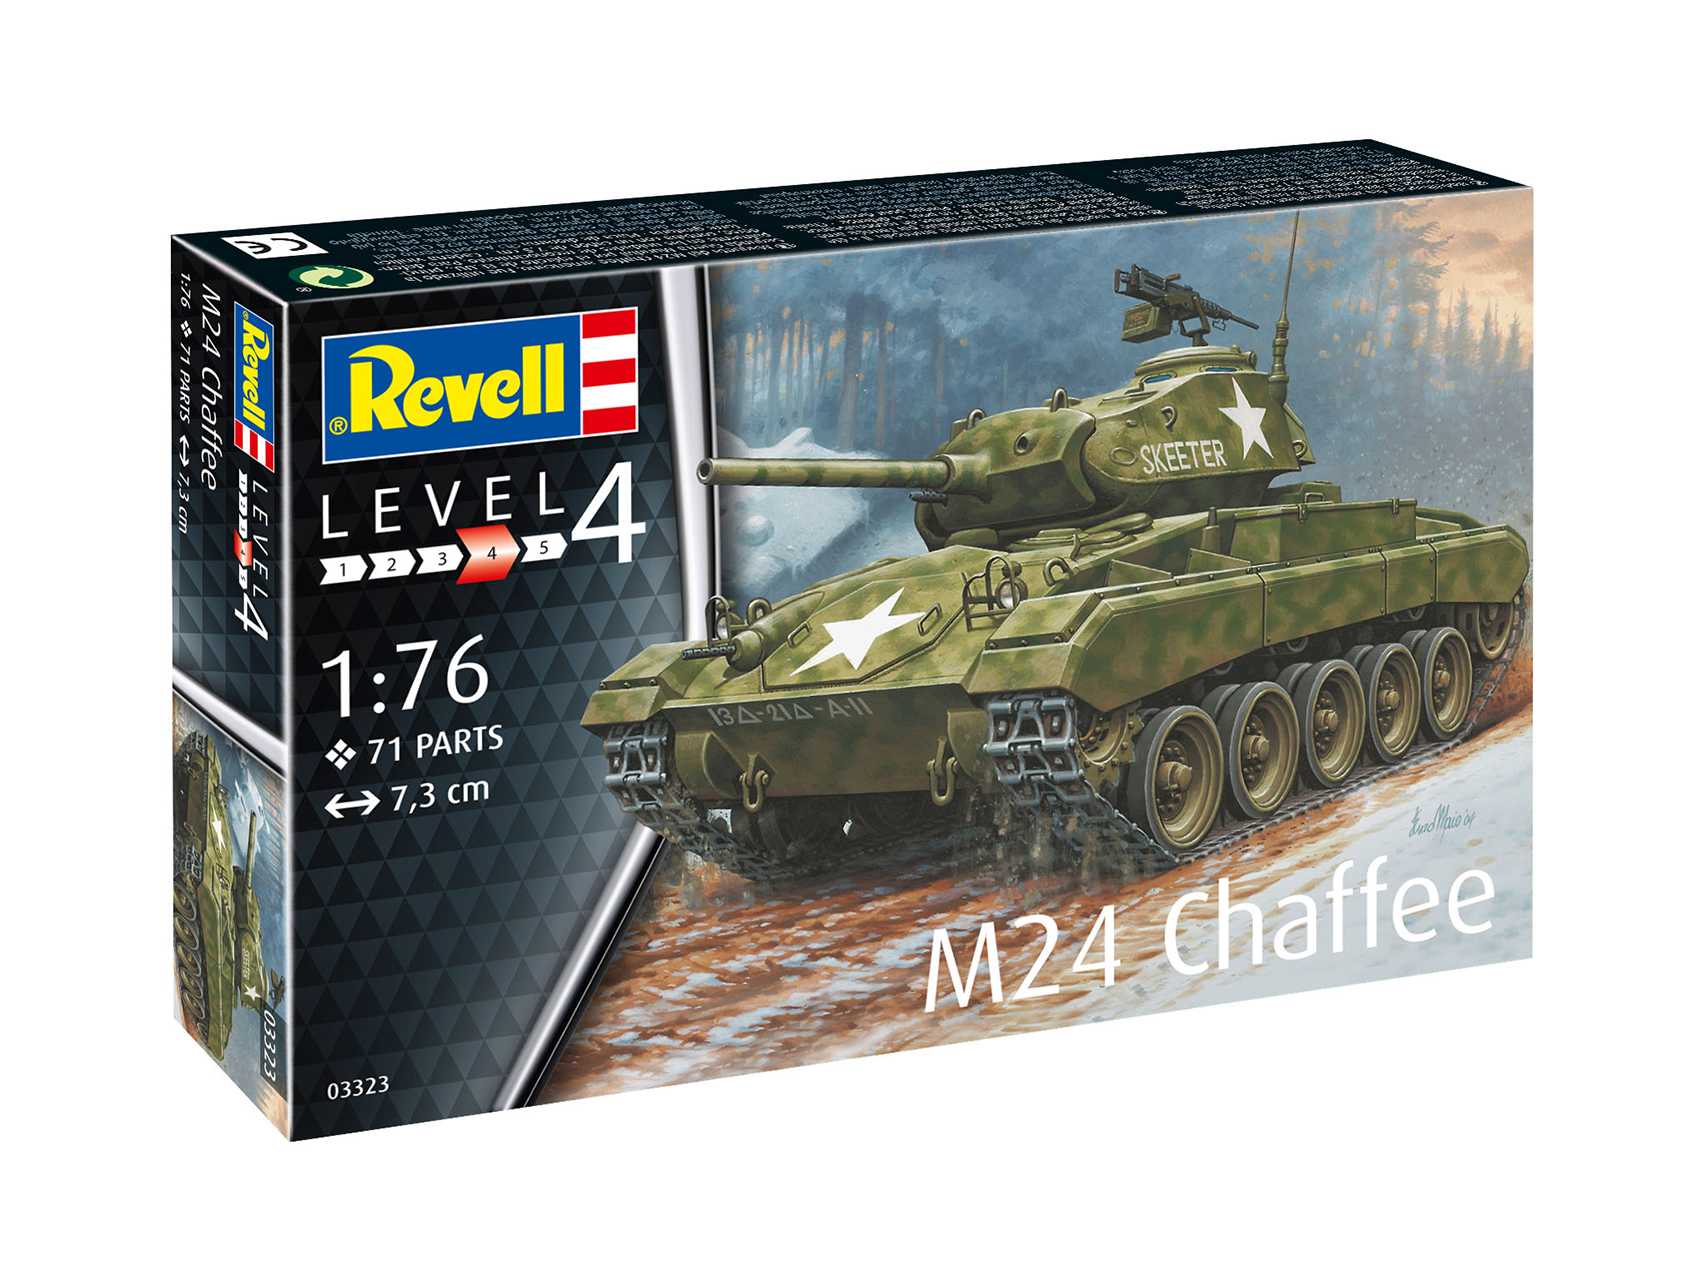 Fotografie Plastic ModelKit tank 03323 - M24 Chaffee (1:76)